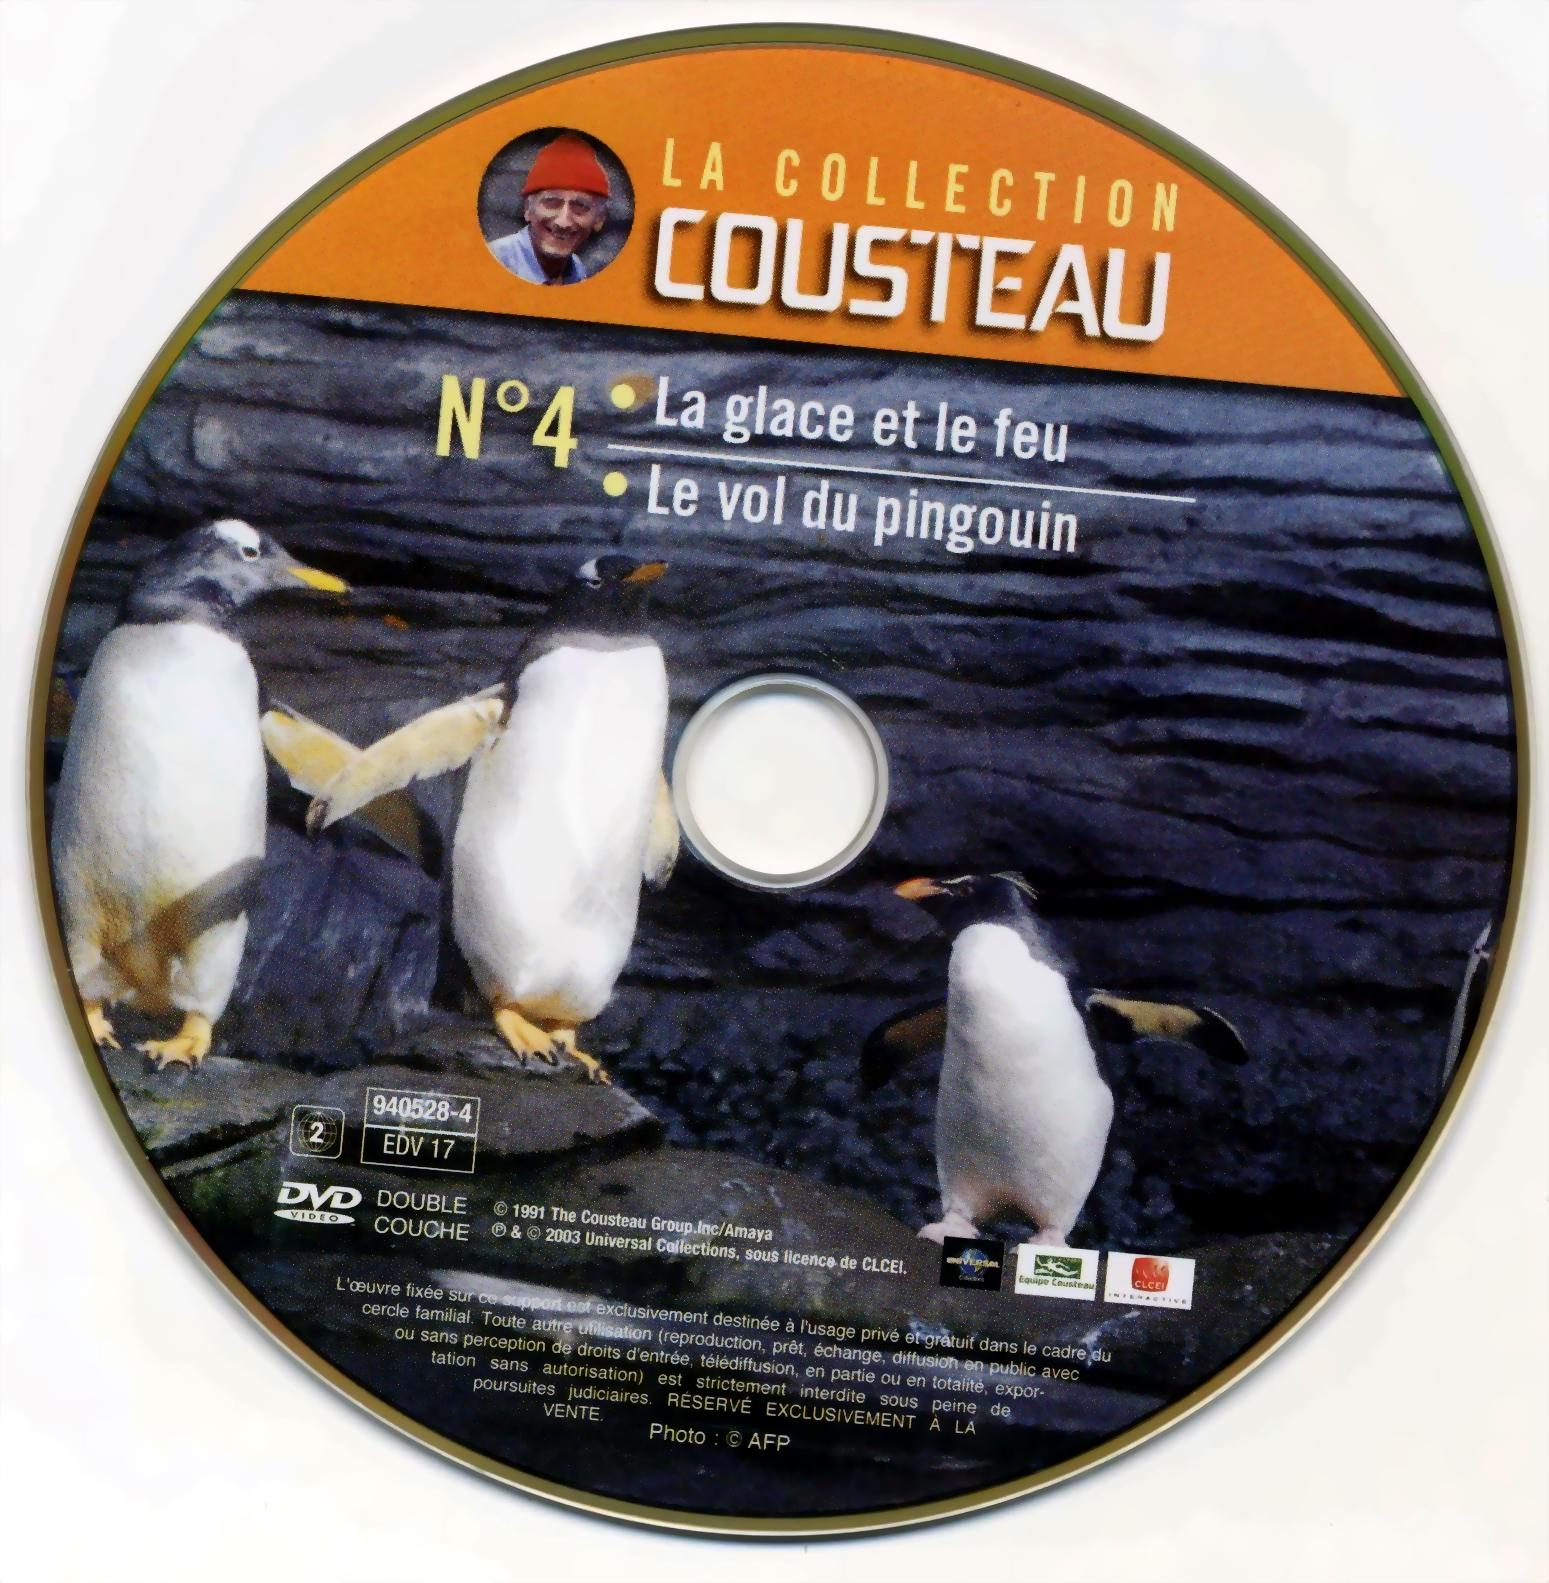 Cousteau Collection vol 04